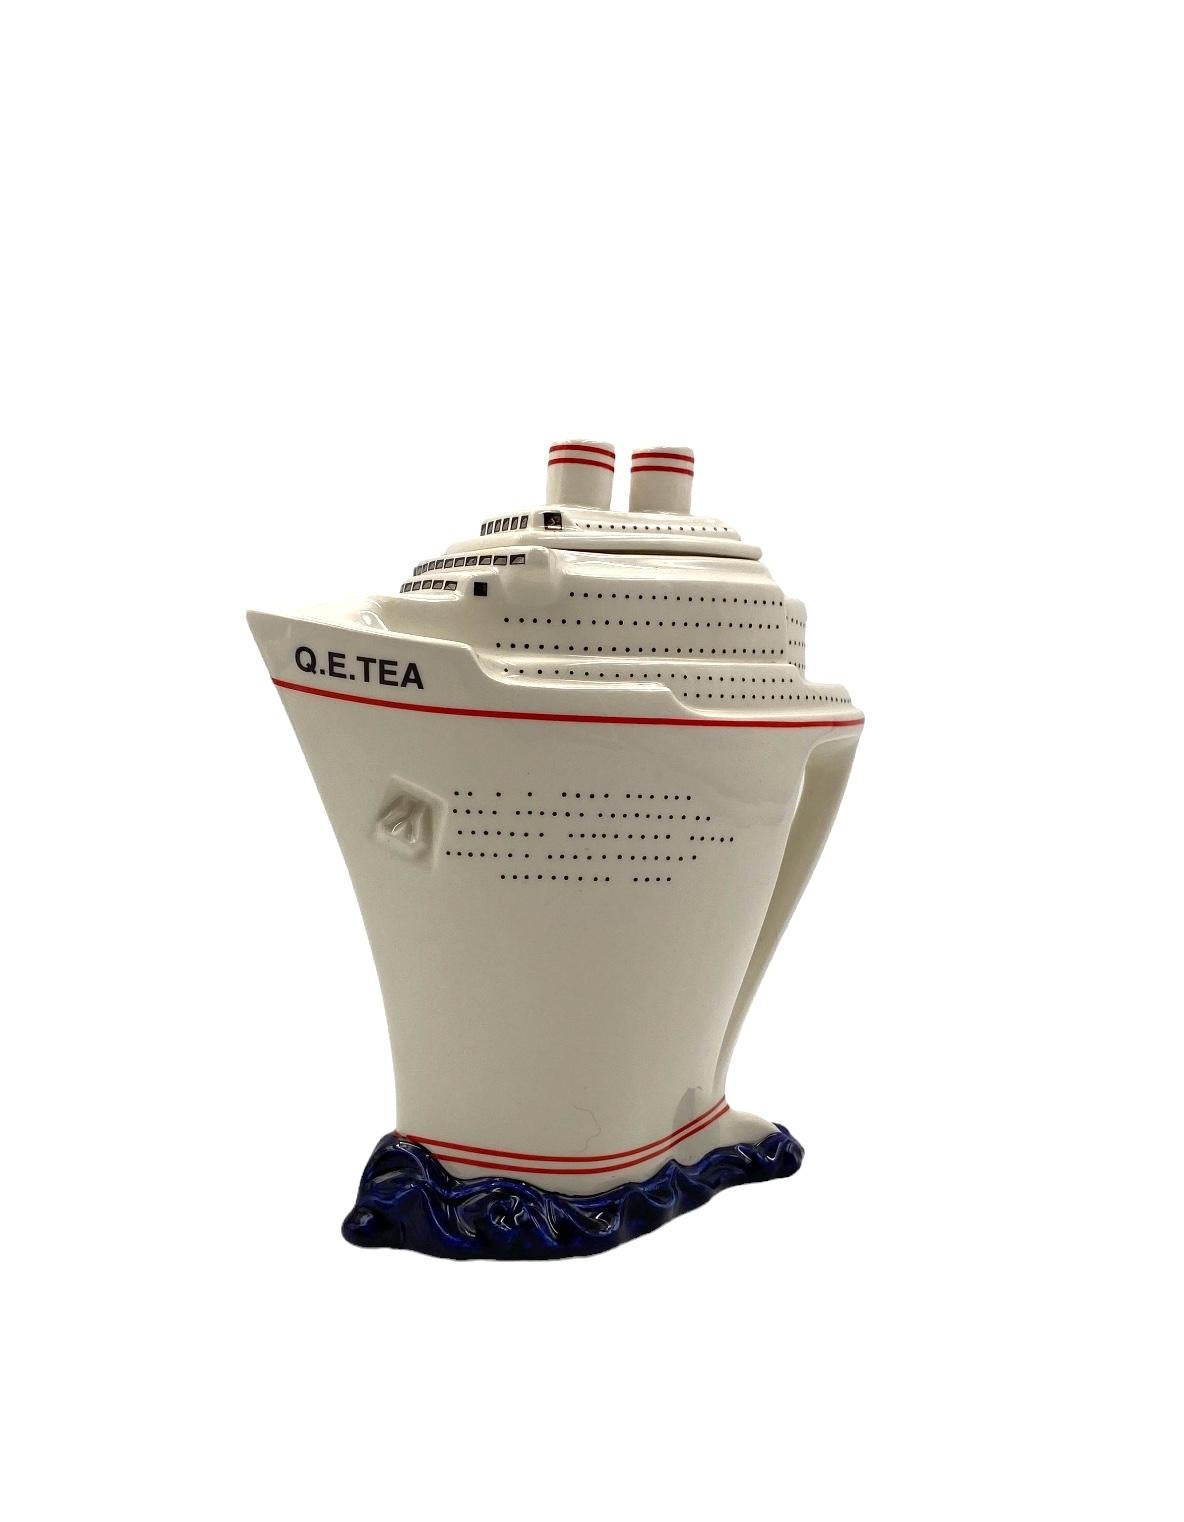 Queen Elizabeth II Cruise Ship Teapot, Paul Cardew, UK, 2000s For Sale 5